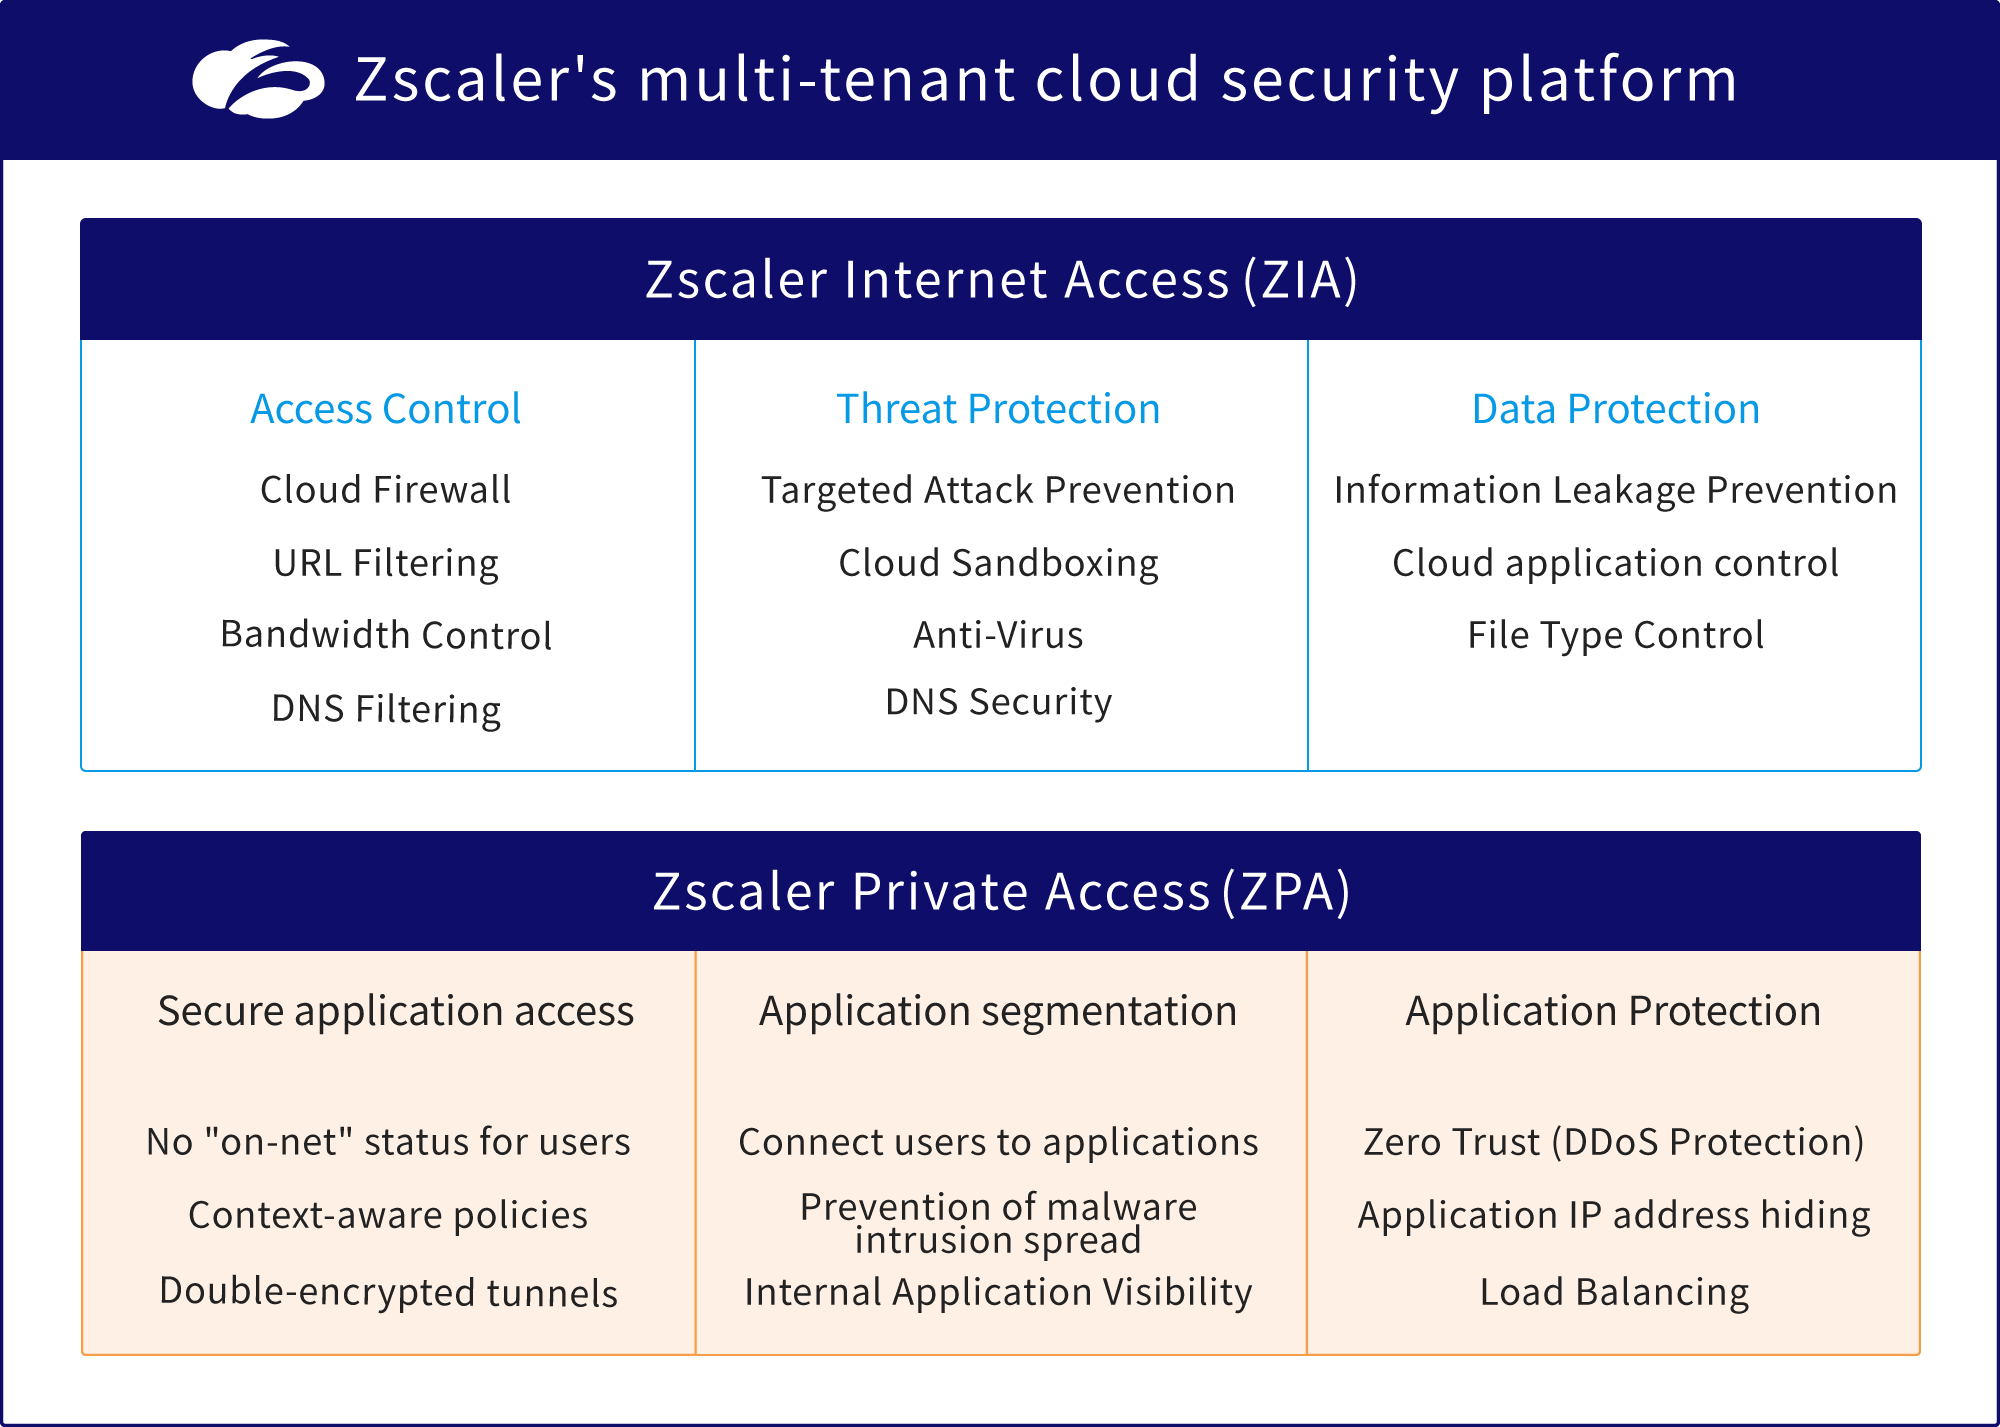 Zscaler's multi-tenant cloud security platform